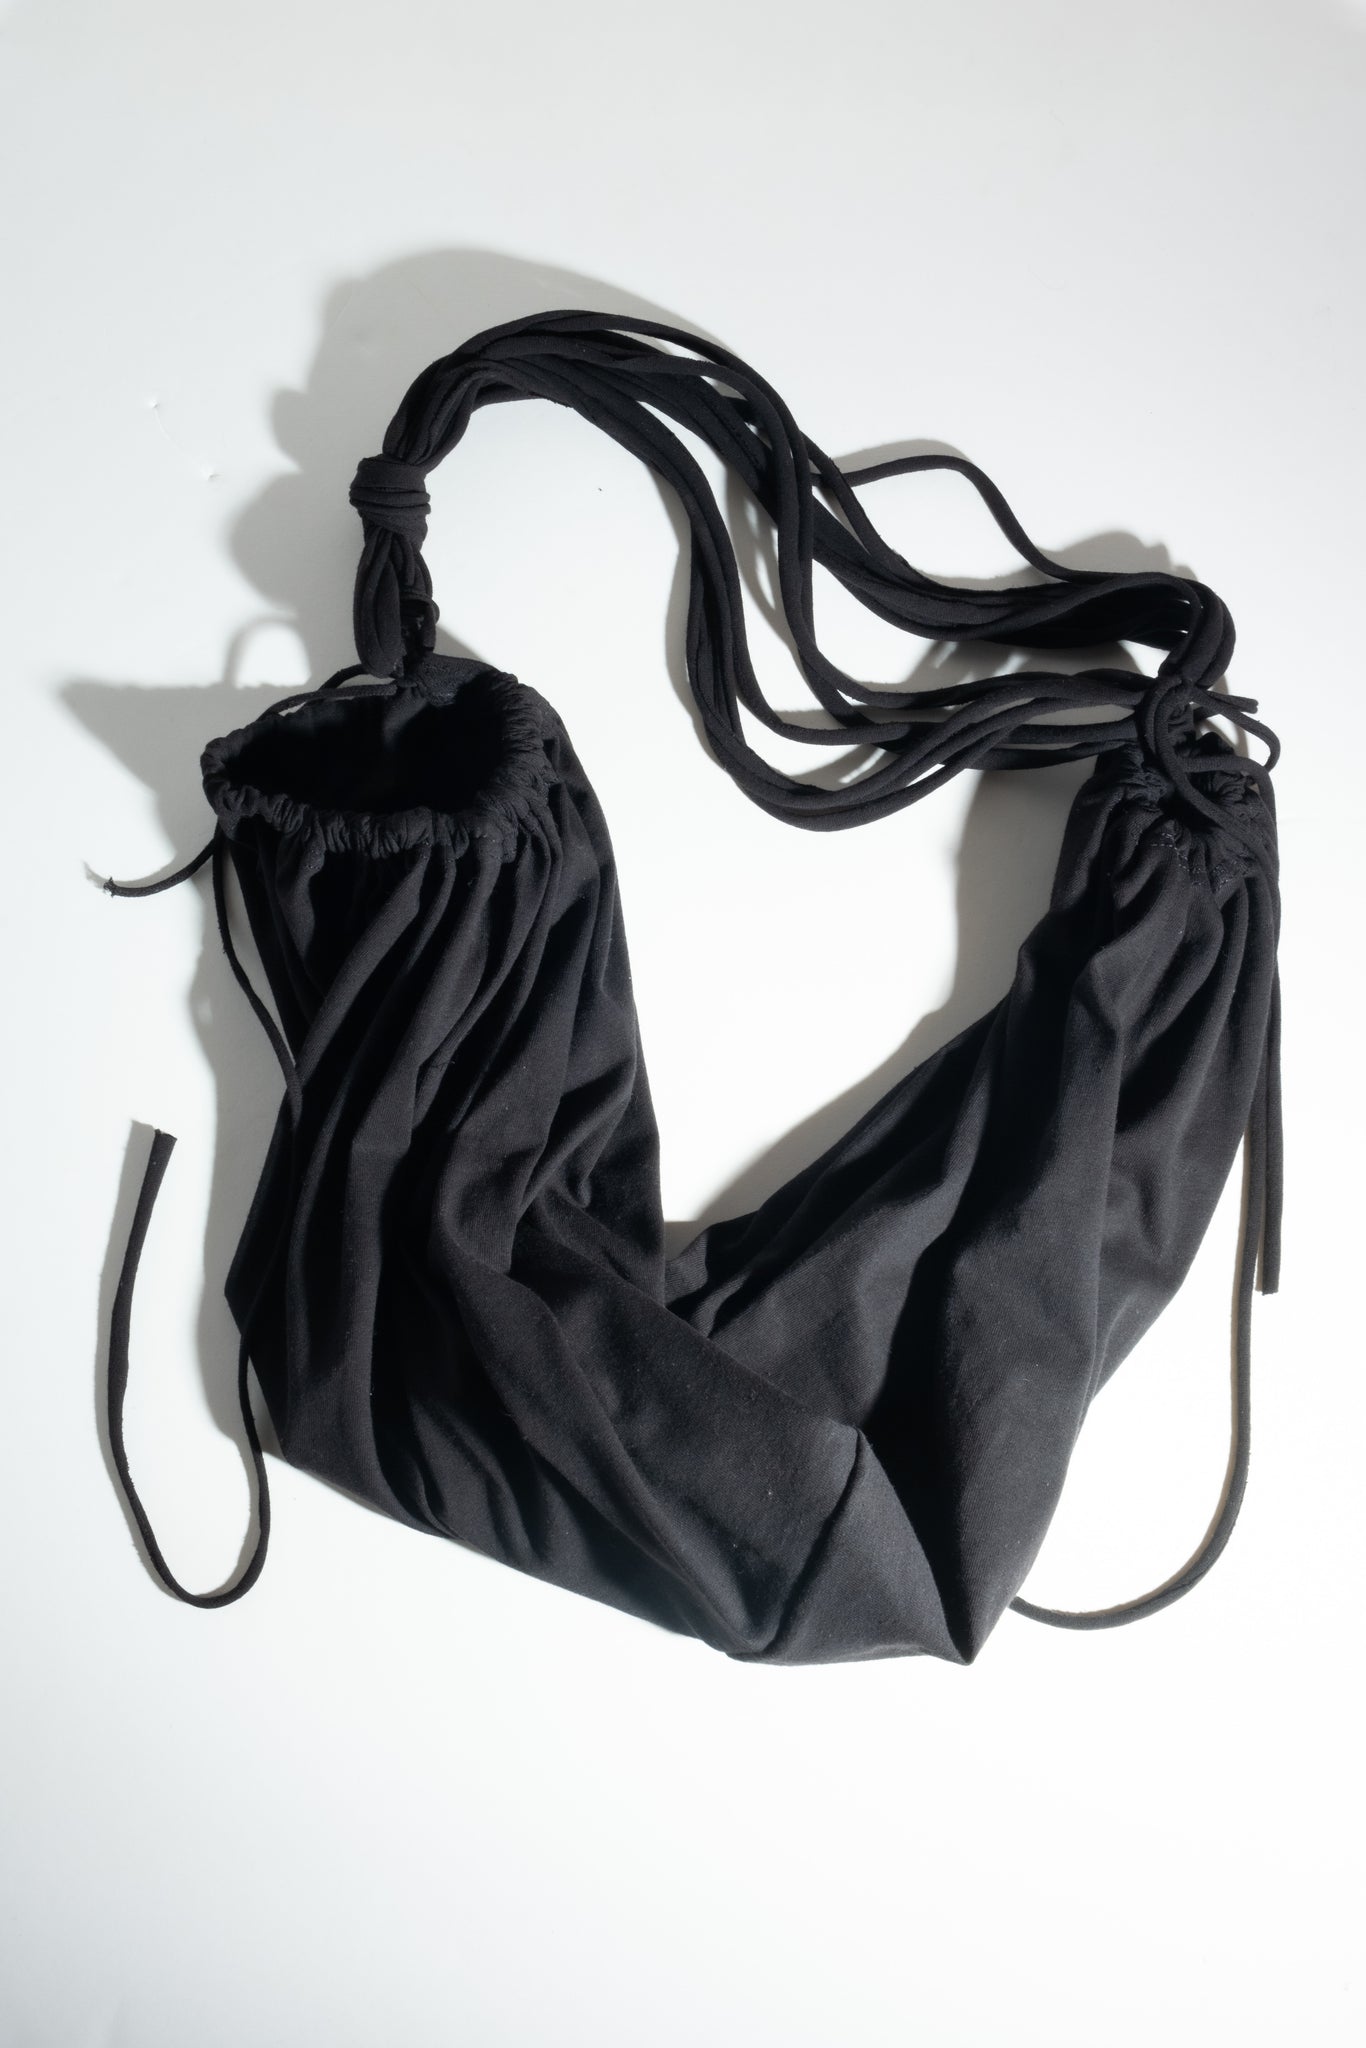 1/1 – T-shirt Bag #1, Black